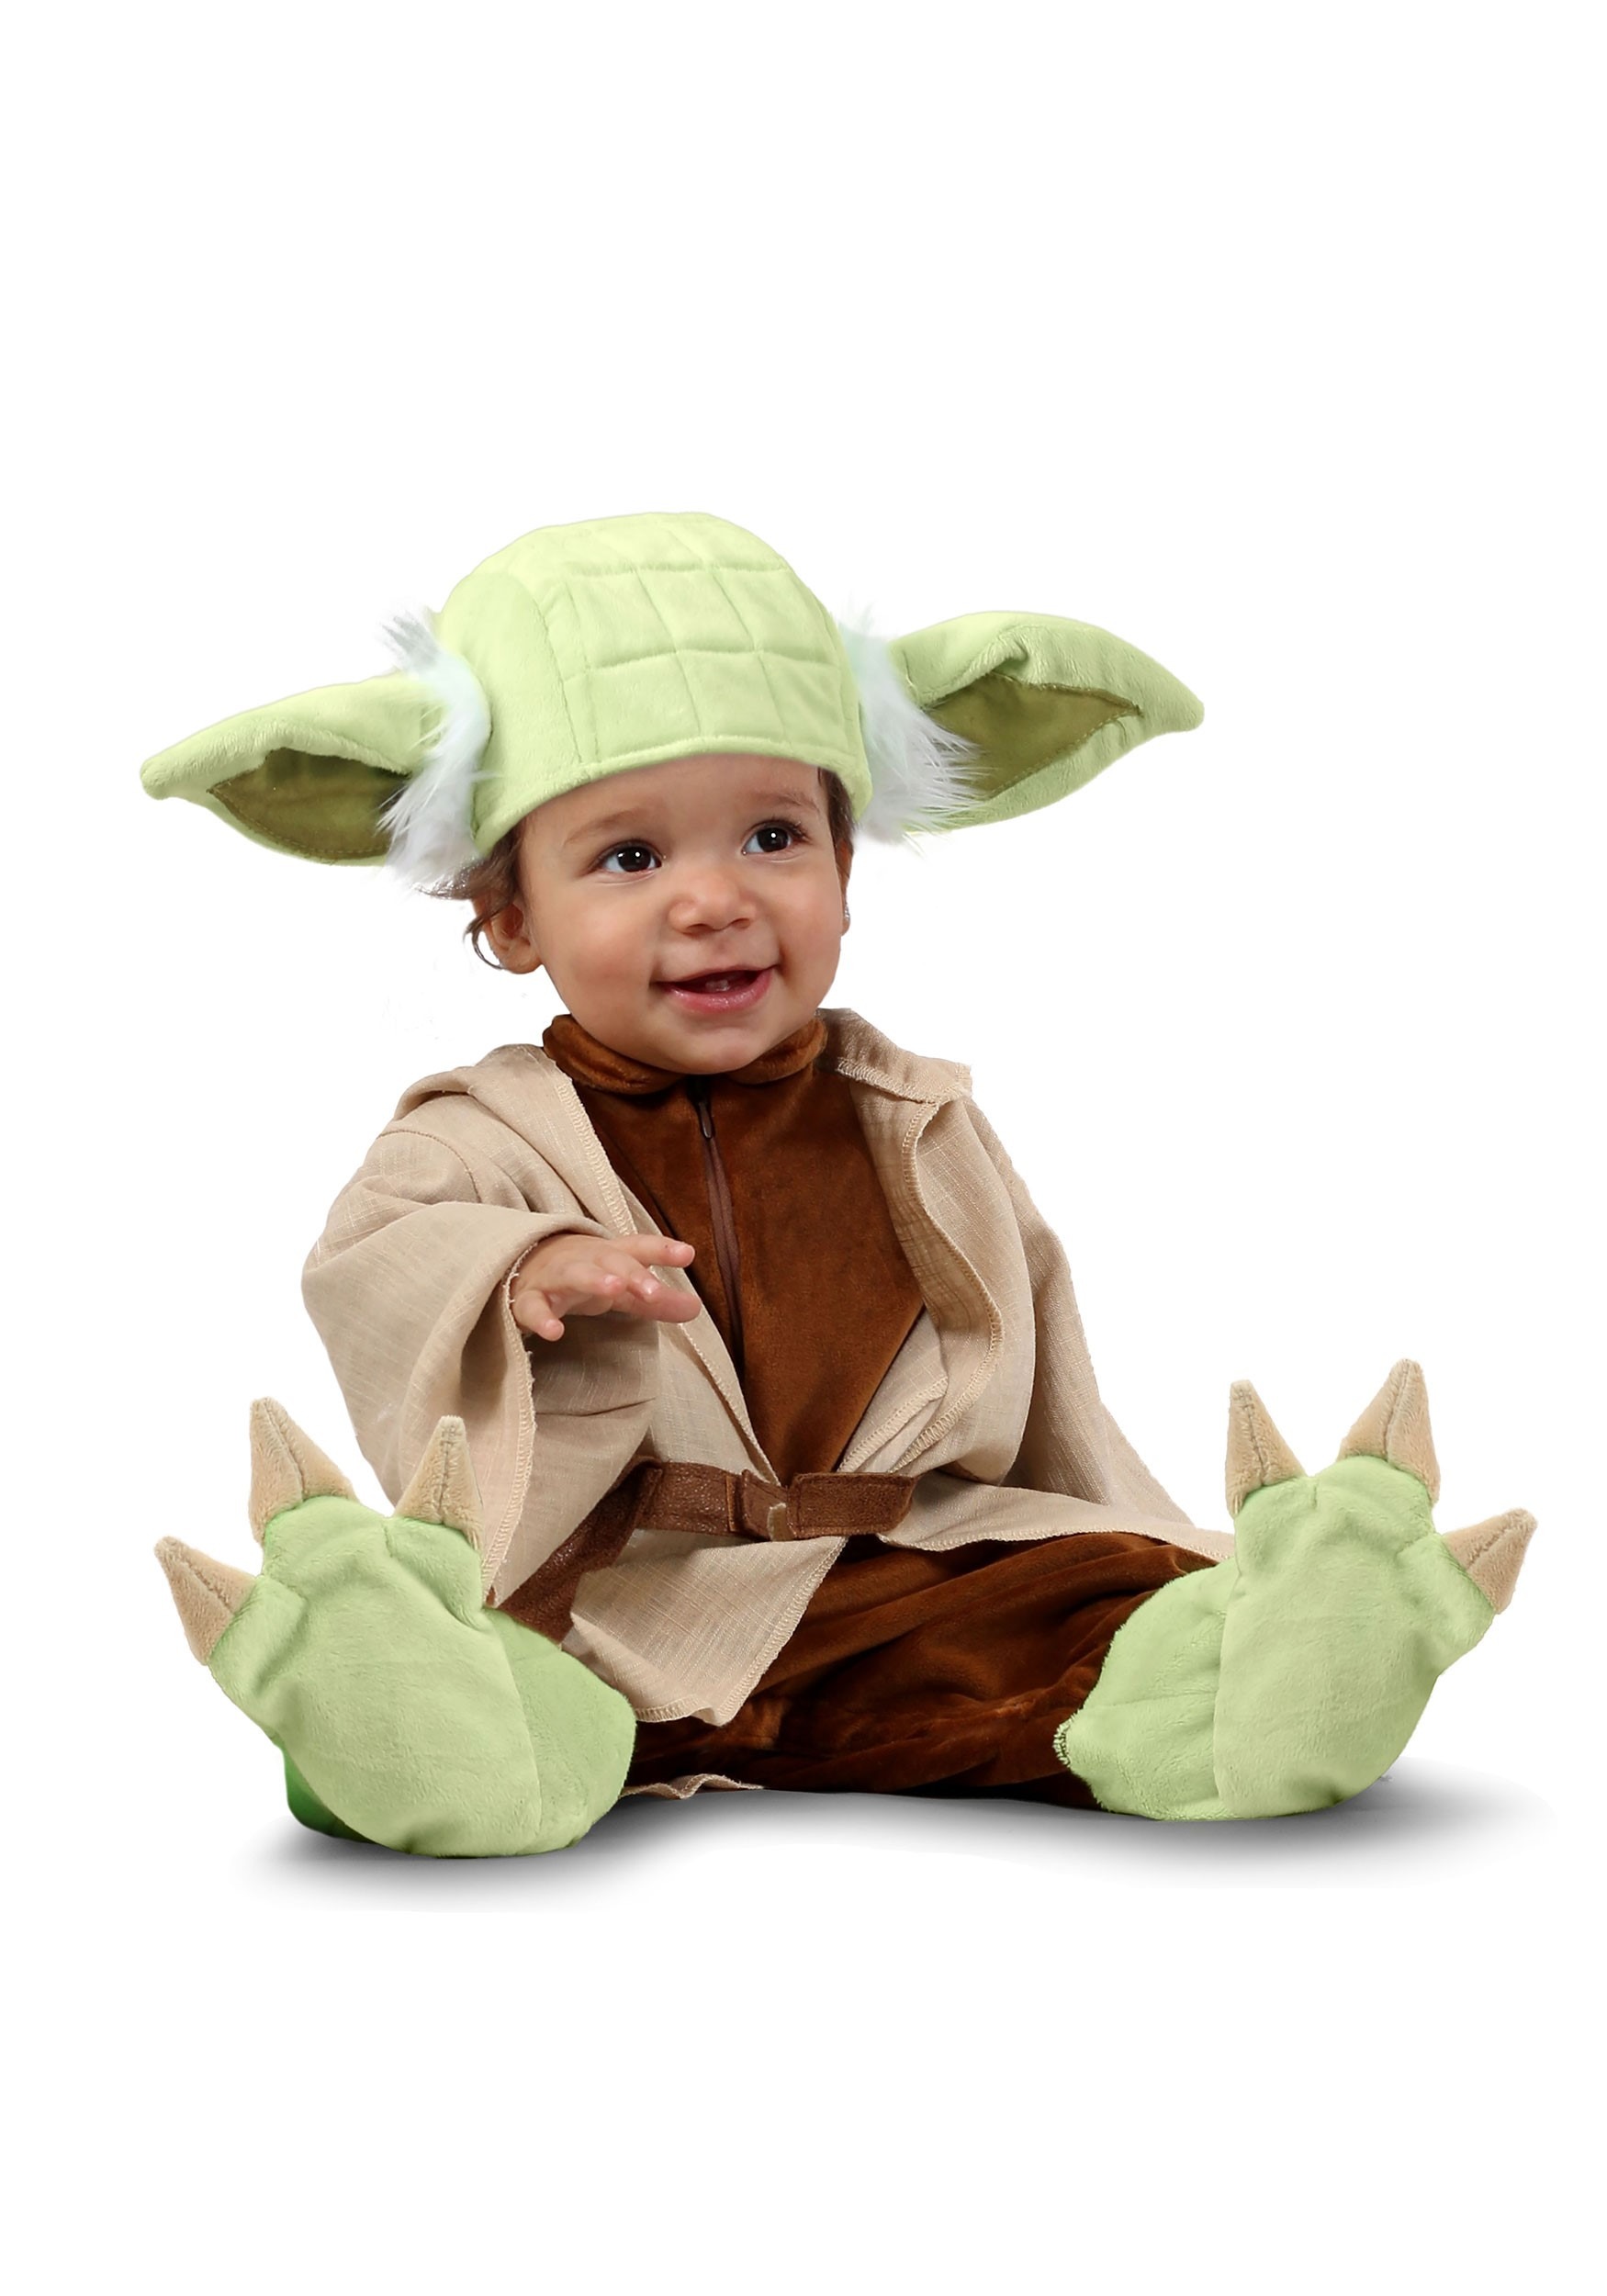 Star Wars Yoda Costume for Babies